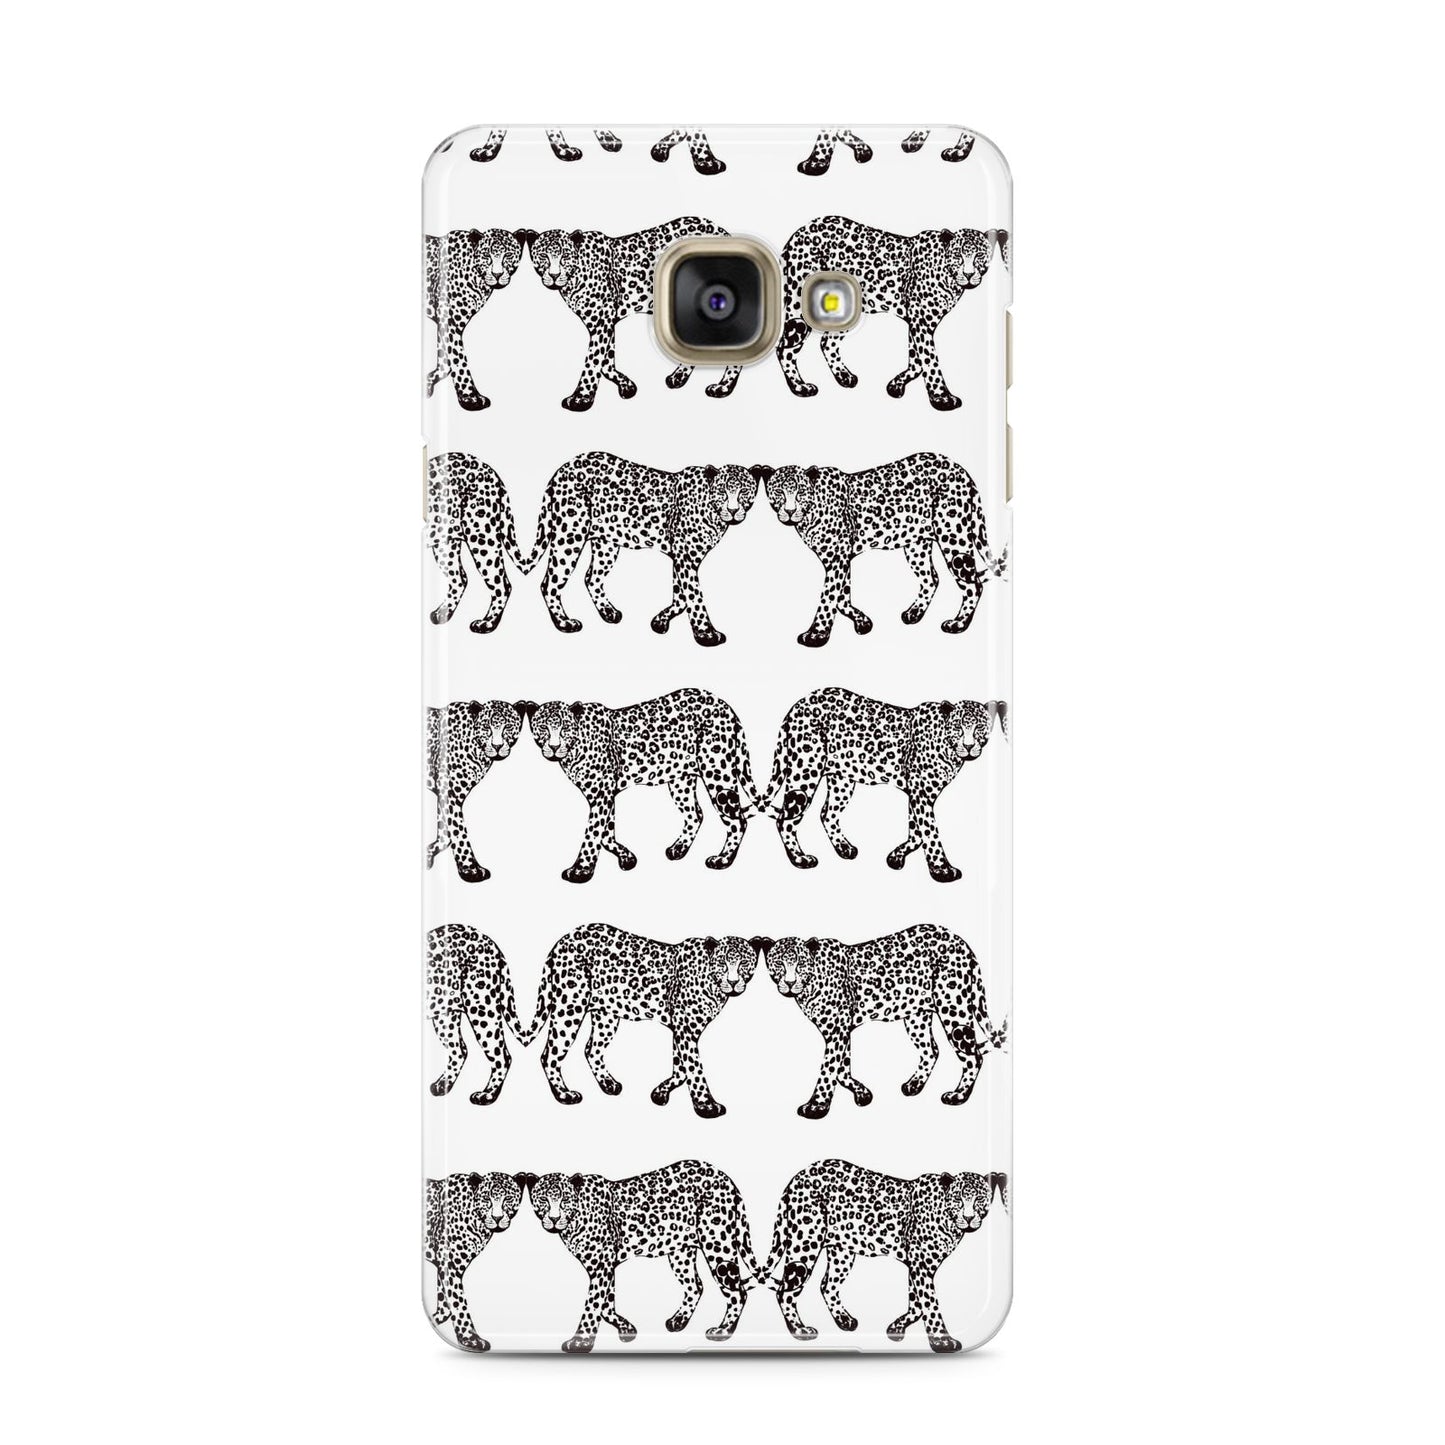 Monochrome Mirrored Leopard Print Samsung Galaxy A3 2016 Case on gold phone